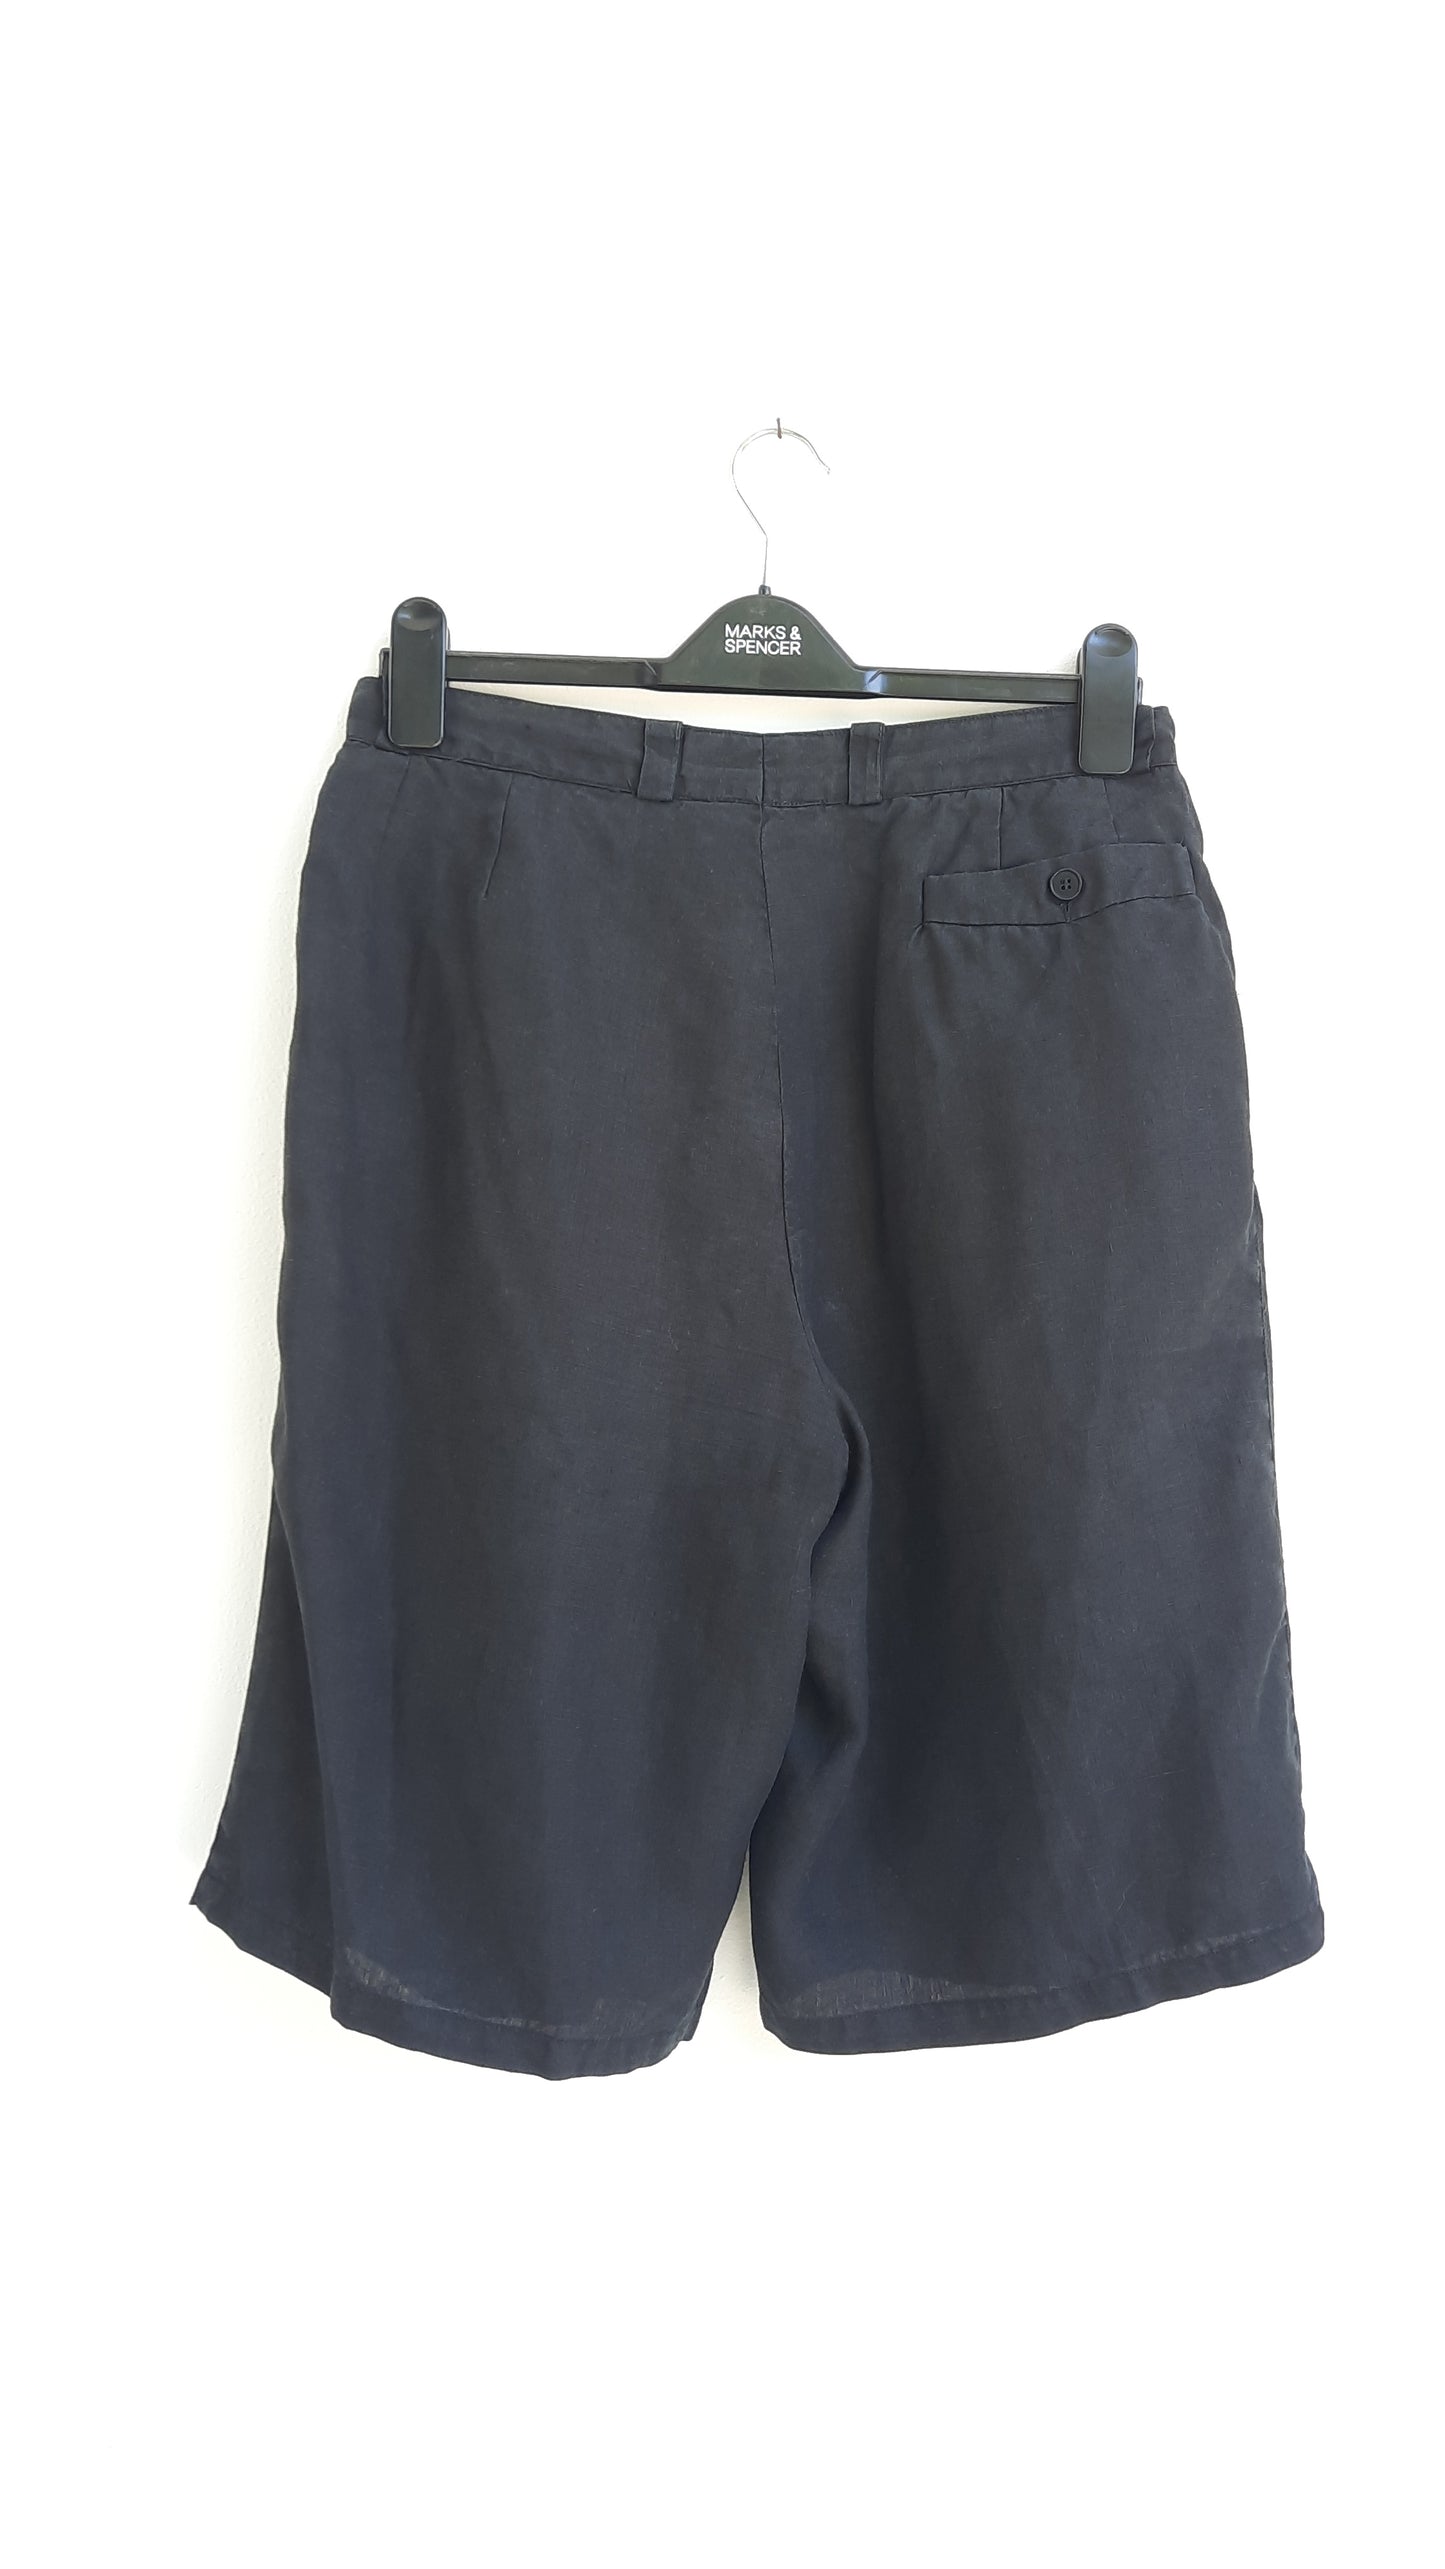 Vintage Basile Classic Black Linen Shorts